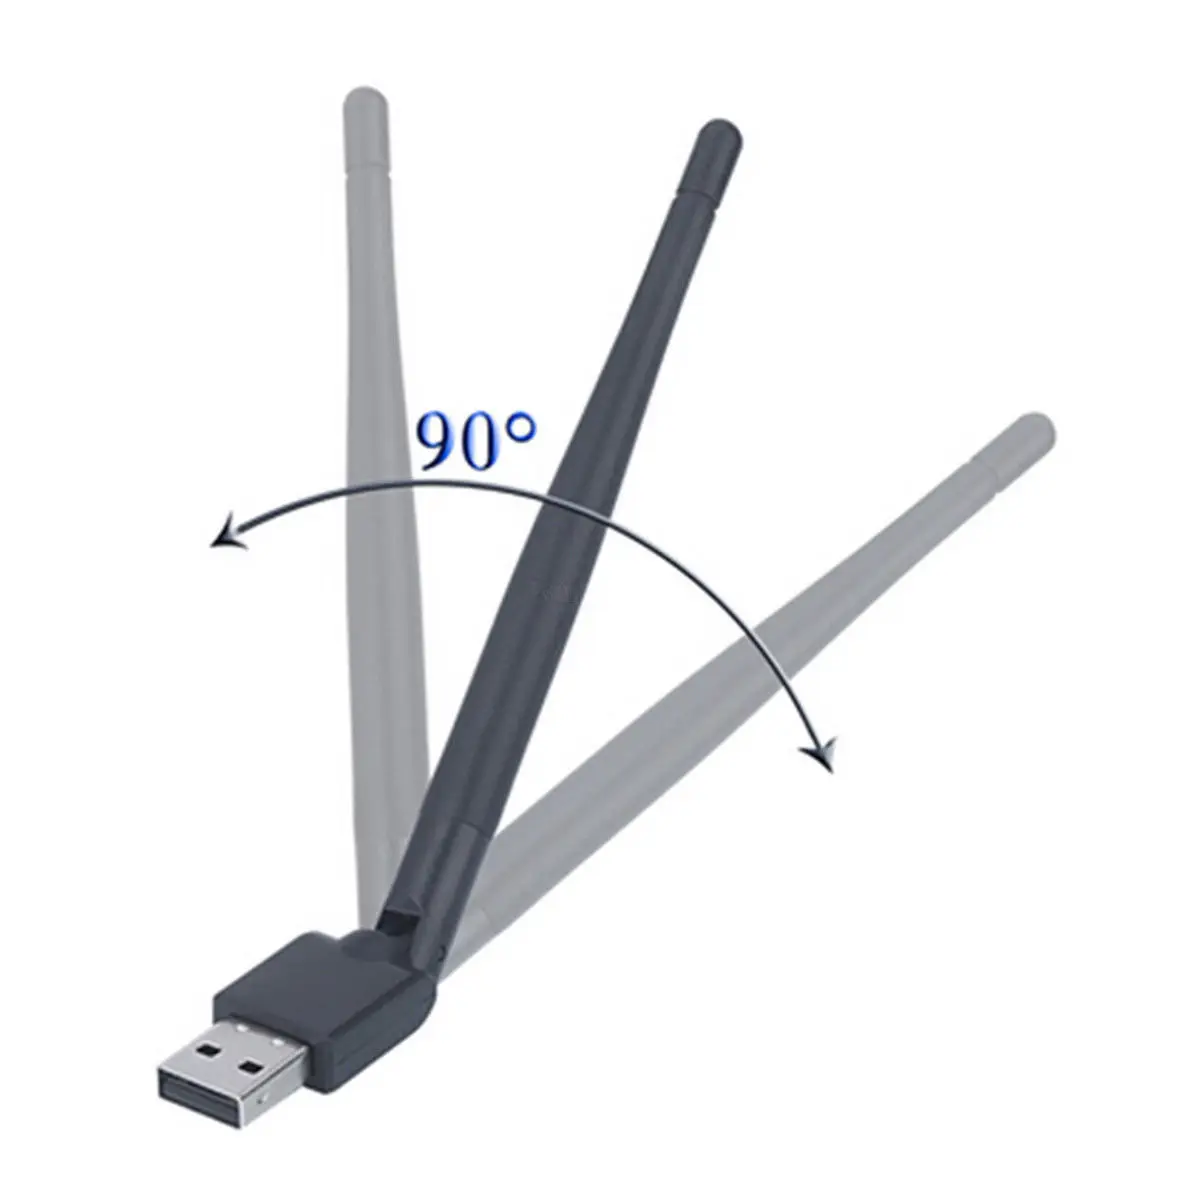 Беспроводной USB WiFi 3Dbi антенна LAN сеть MTK7601 7601 чипсет для Koqit K1 S2U2 спутниковый Recevier цифровой ТВ-бокс Gtmedia V7S